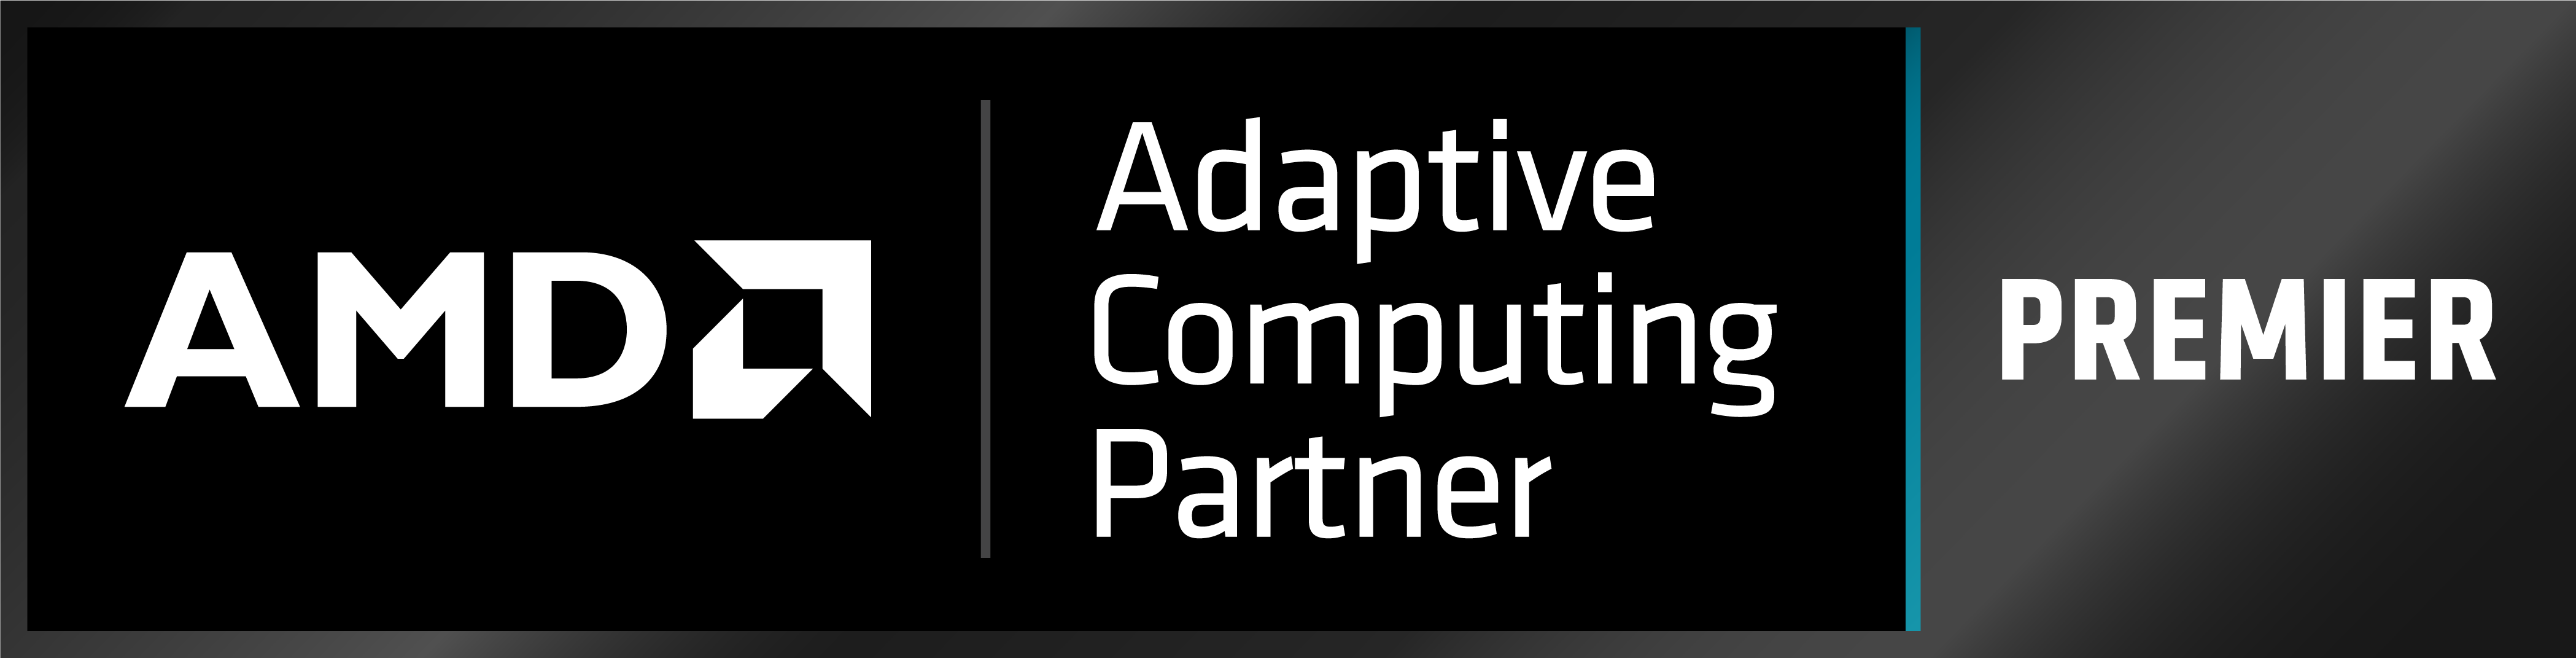 AMD ACP Premier Partner